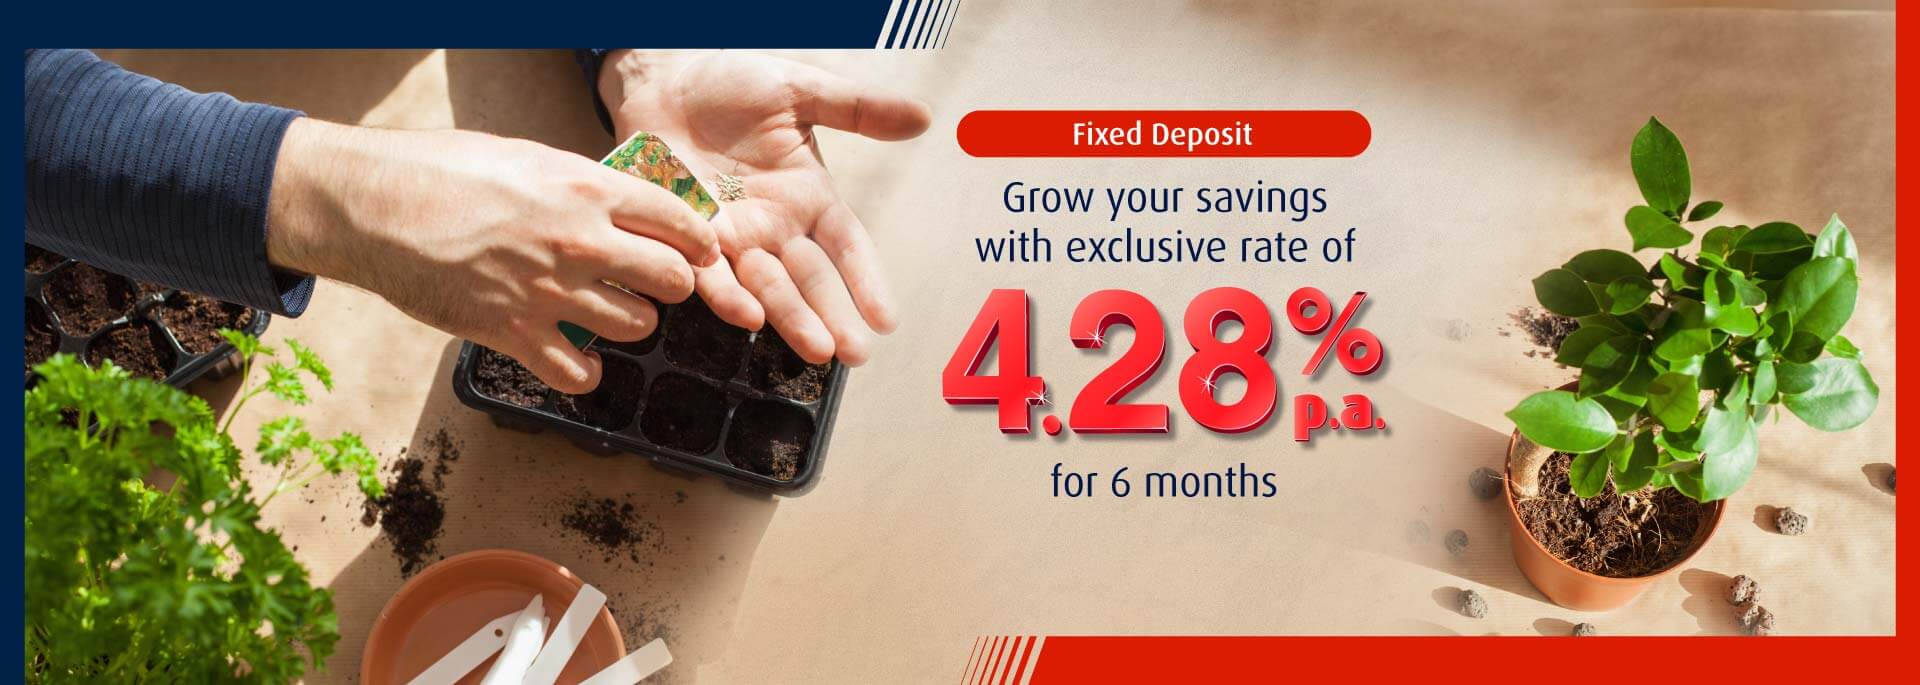 Hong leong fixed deposit rate singapore